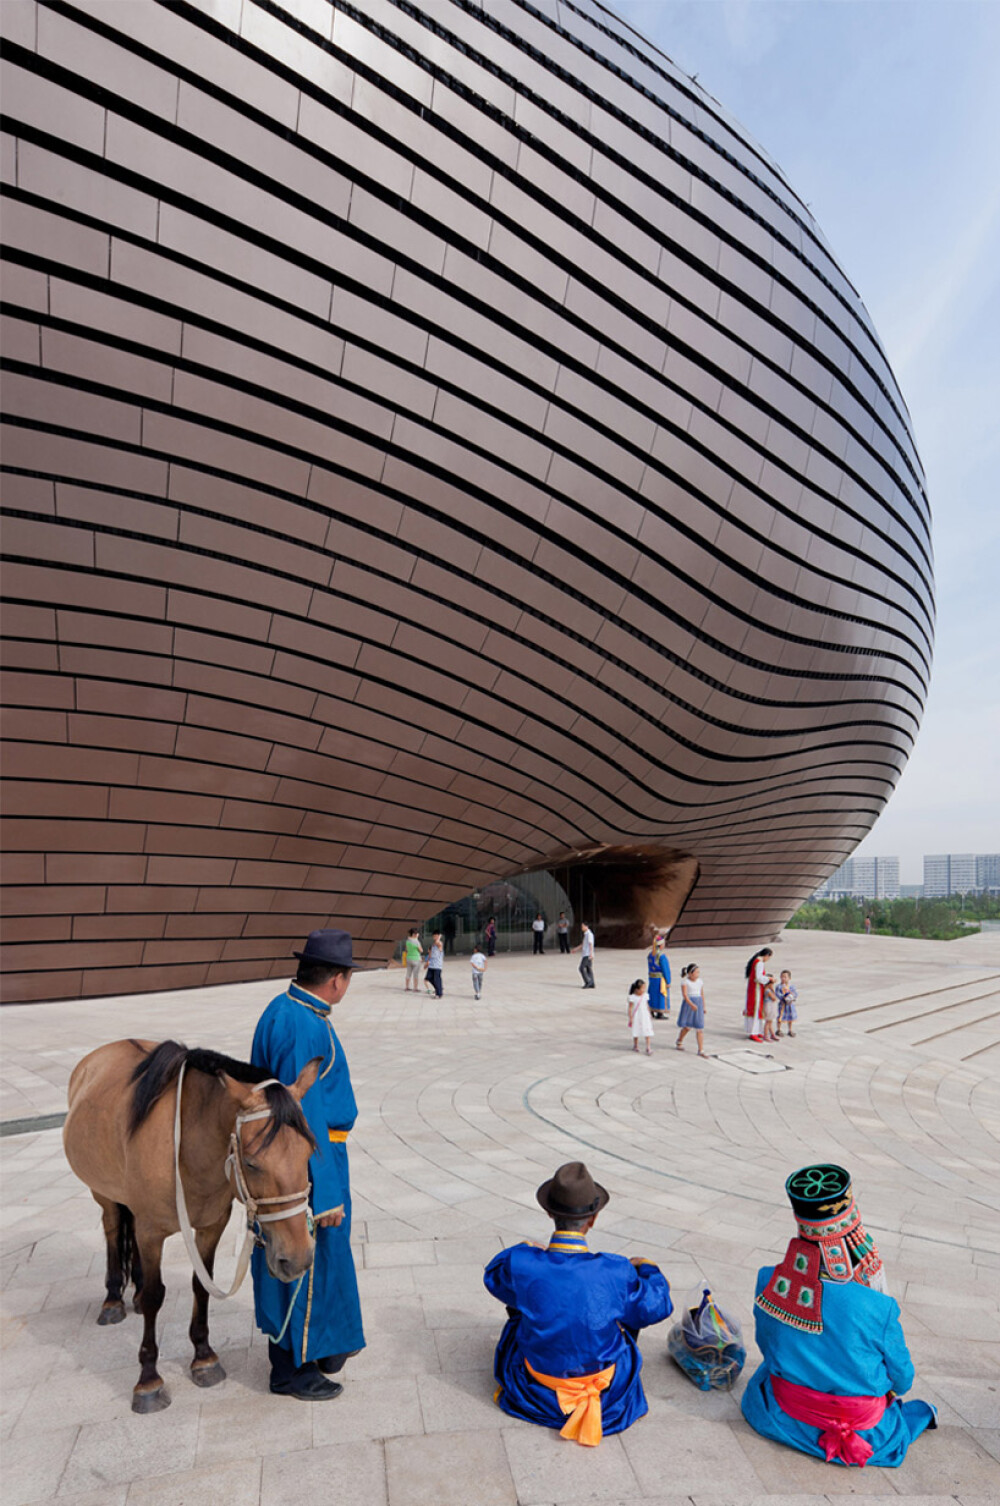 China uimeste din nou. Constructia bizara si costisitoare ridicata intr-un oras pustiu. Galerie FOTO - Imaginea 6